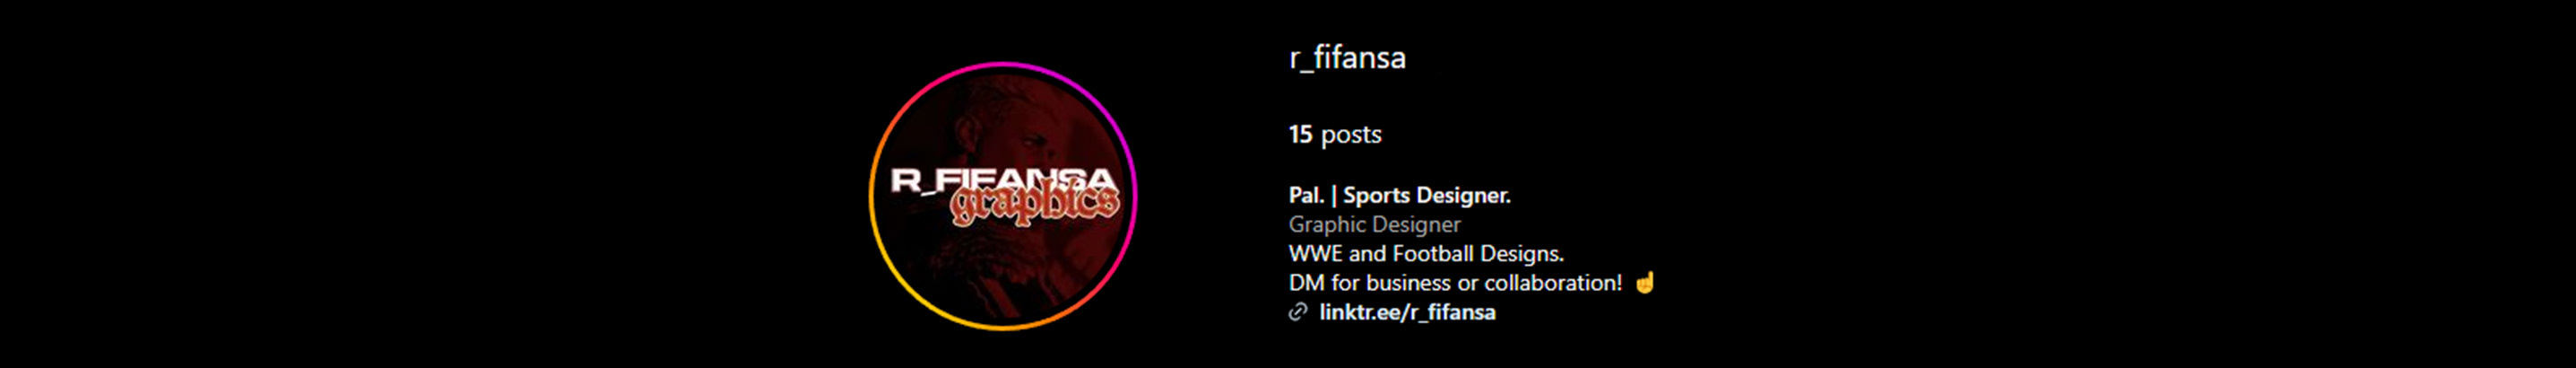 Baner profilu użytkownika Naufal Rafifansa